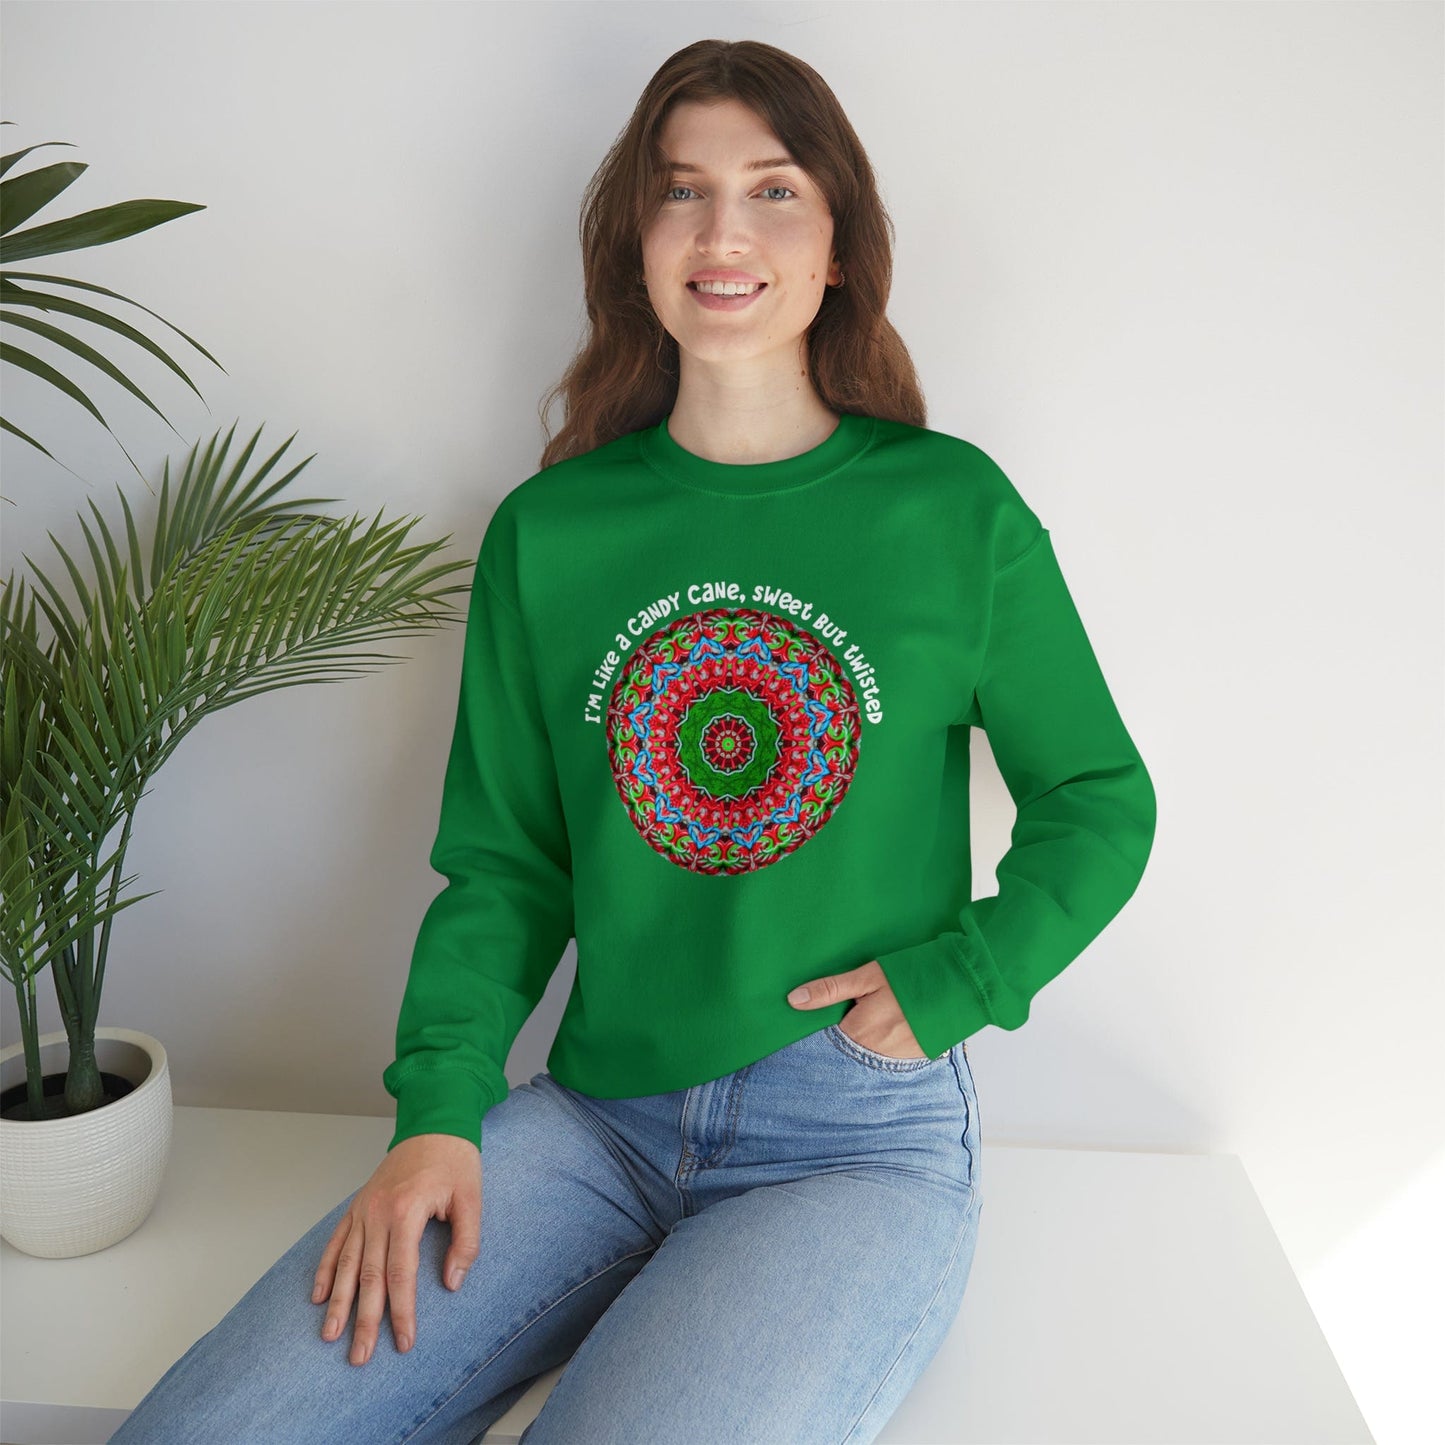 Cute & Funny Christmas Sweatshirt, Sarcastic Candy Cane Mandala Art Shirt, Im like a candy cane sweet but twisted IRISH GREEN